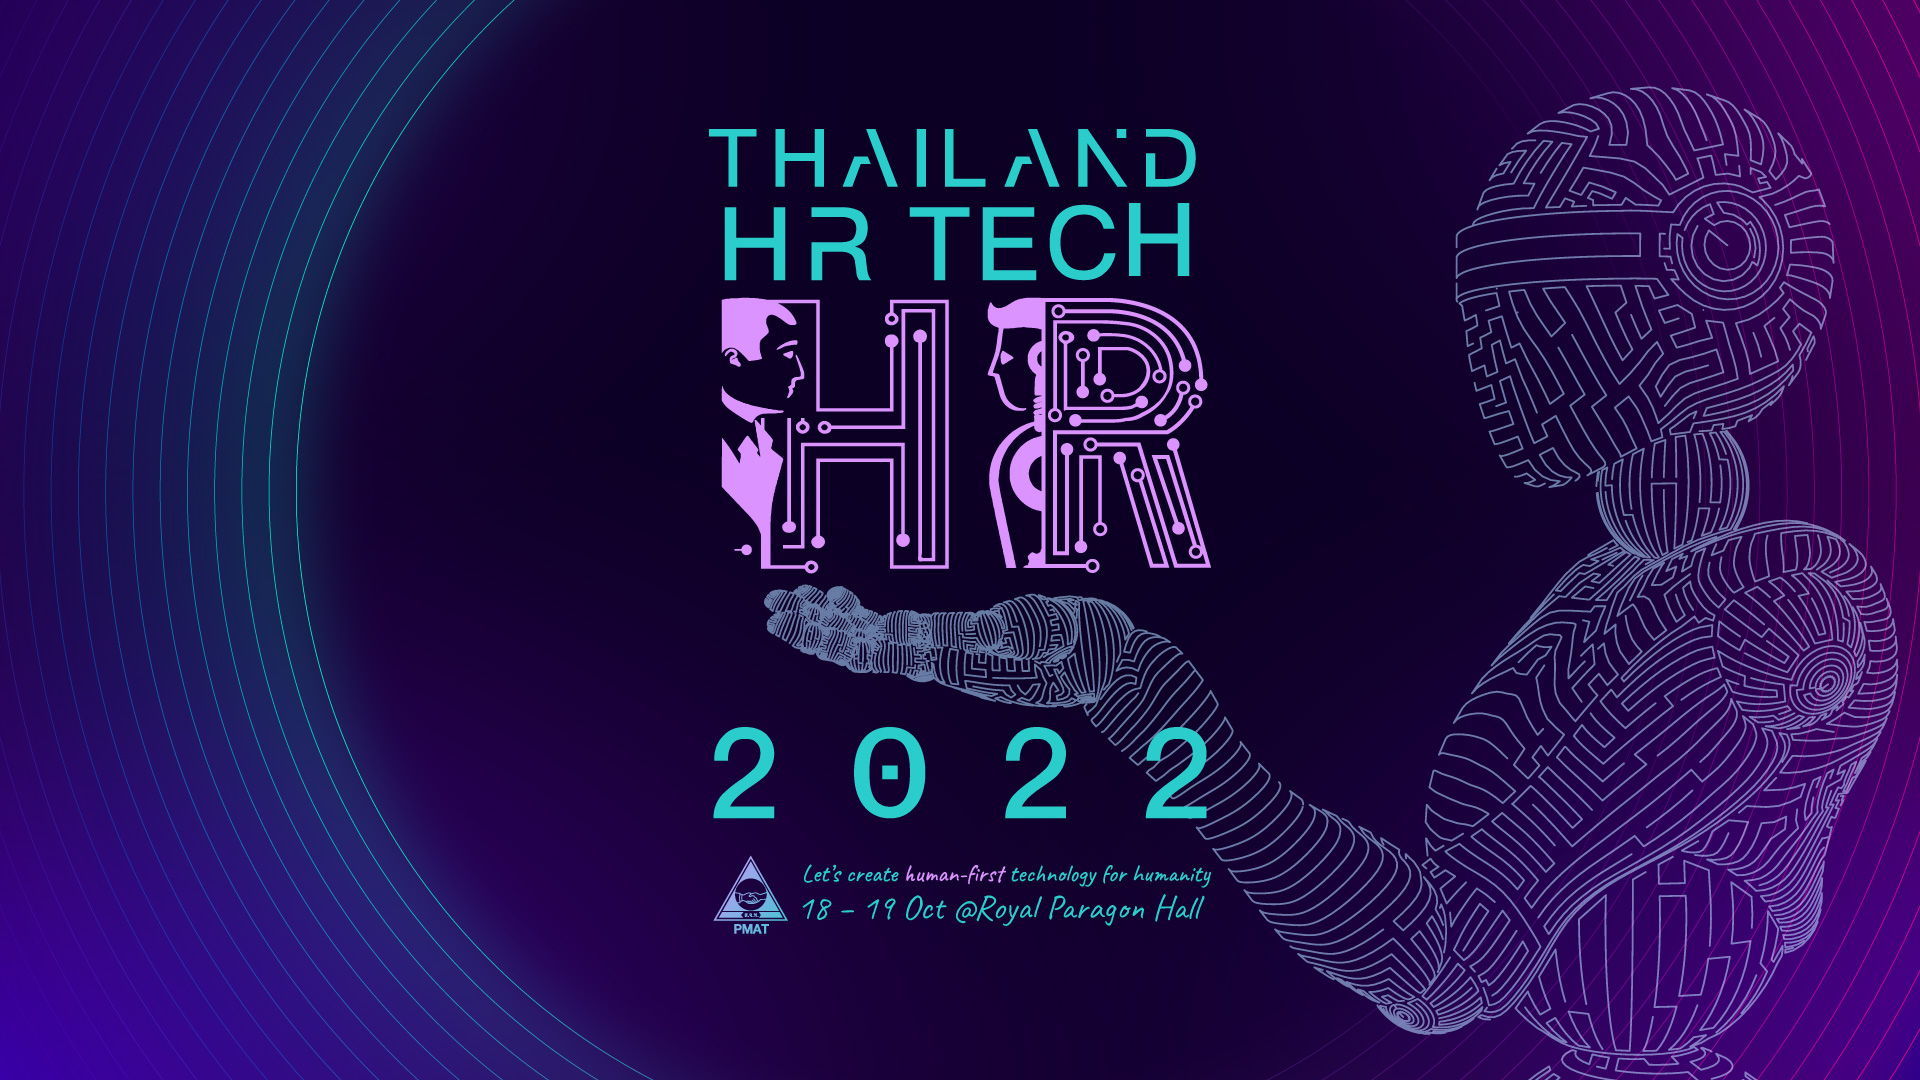 About THAILAND HR TECH 2024